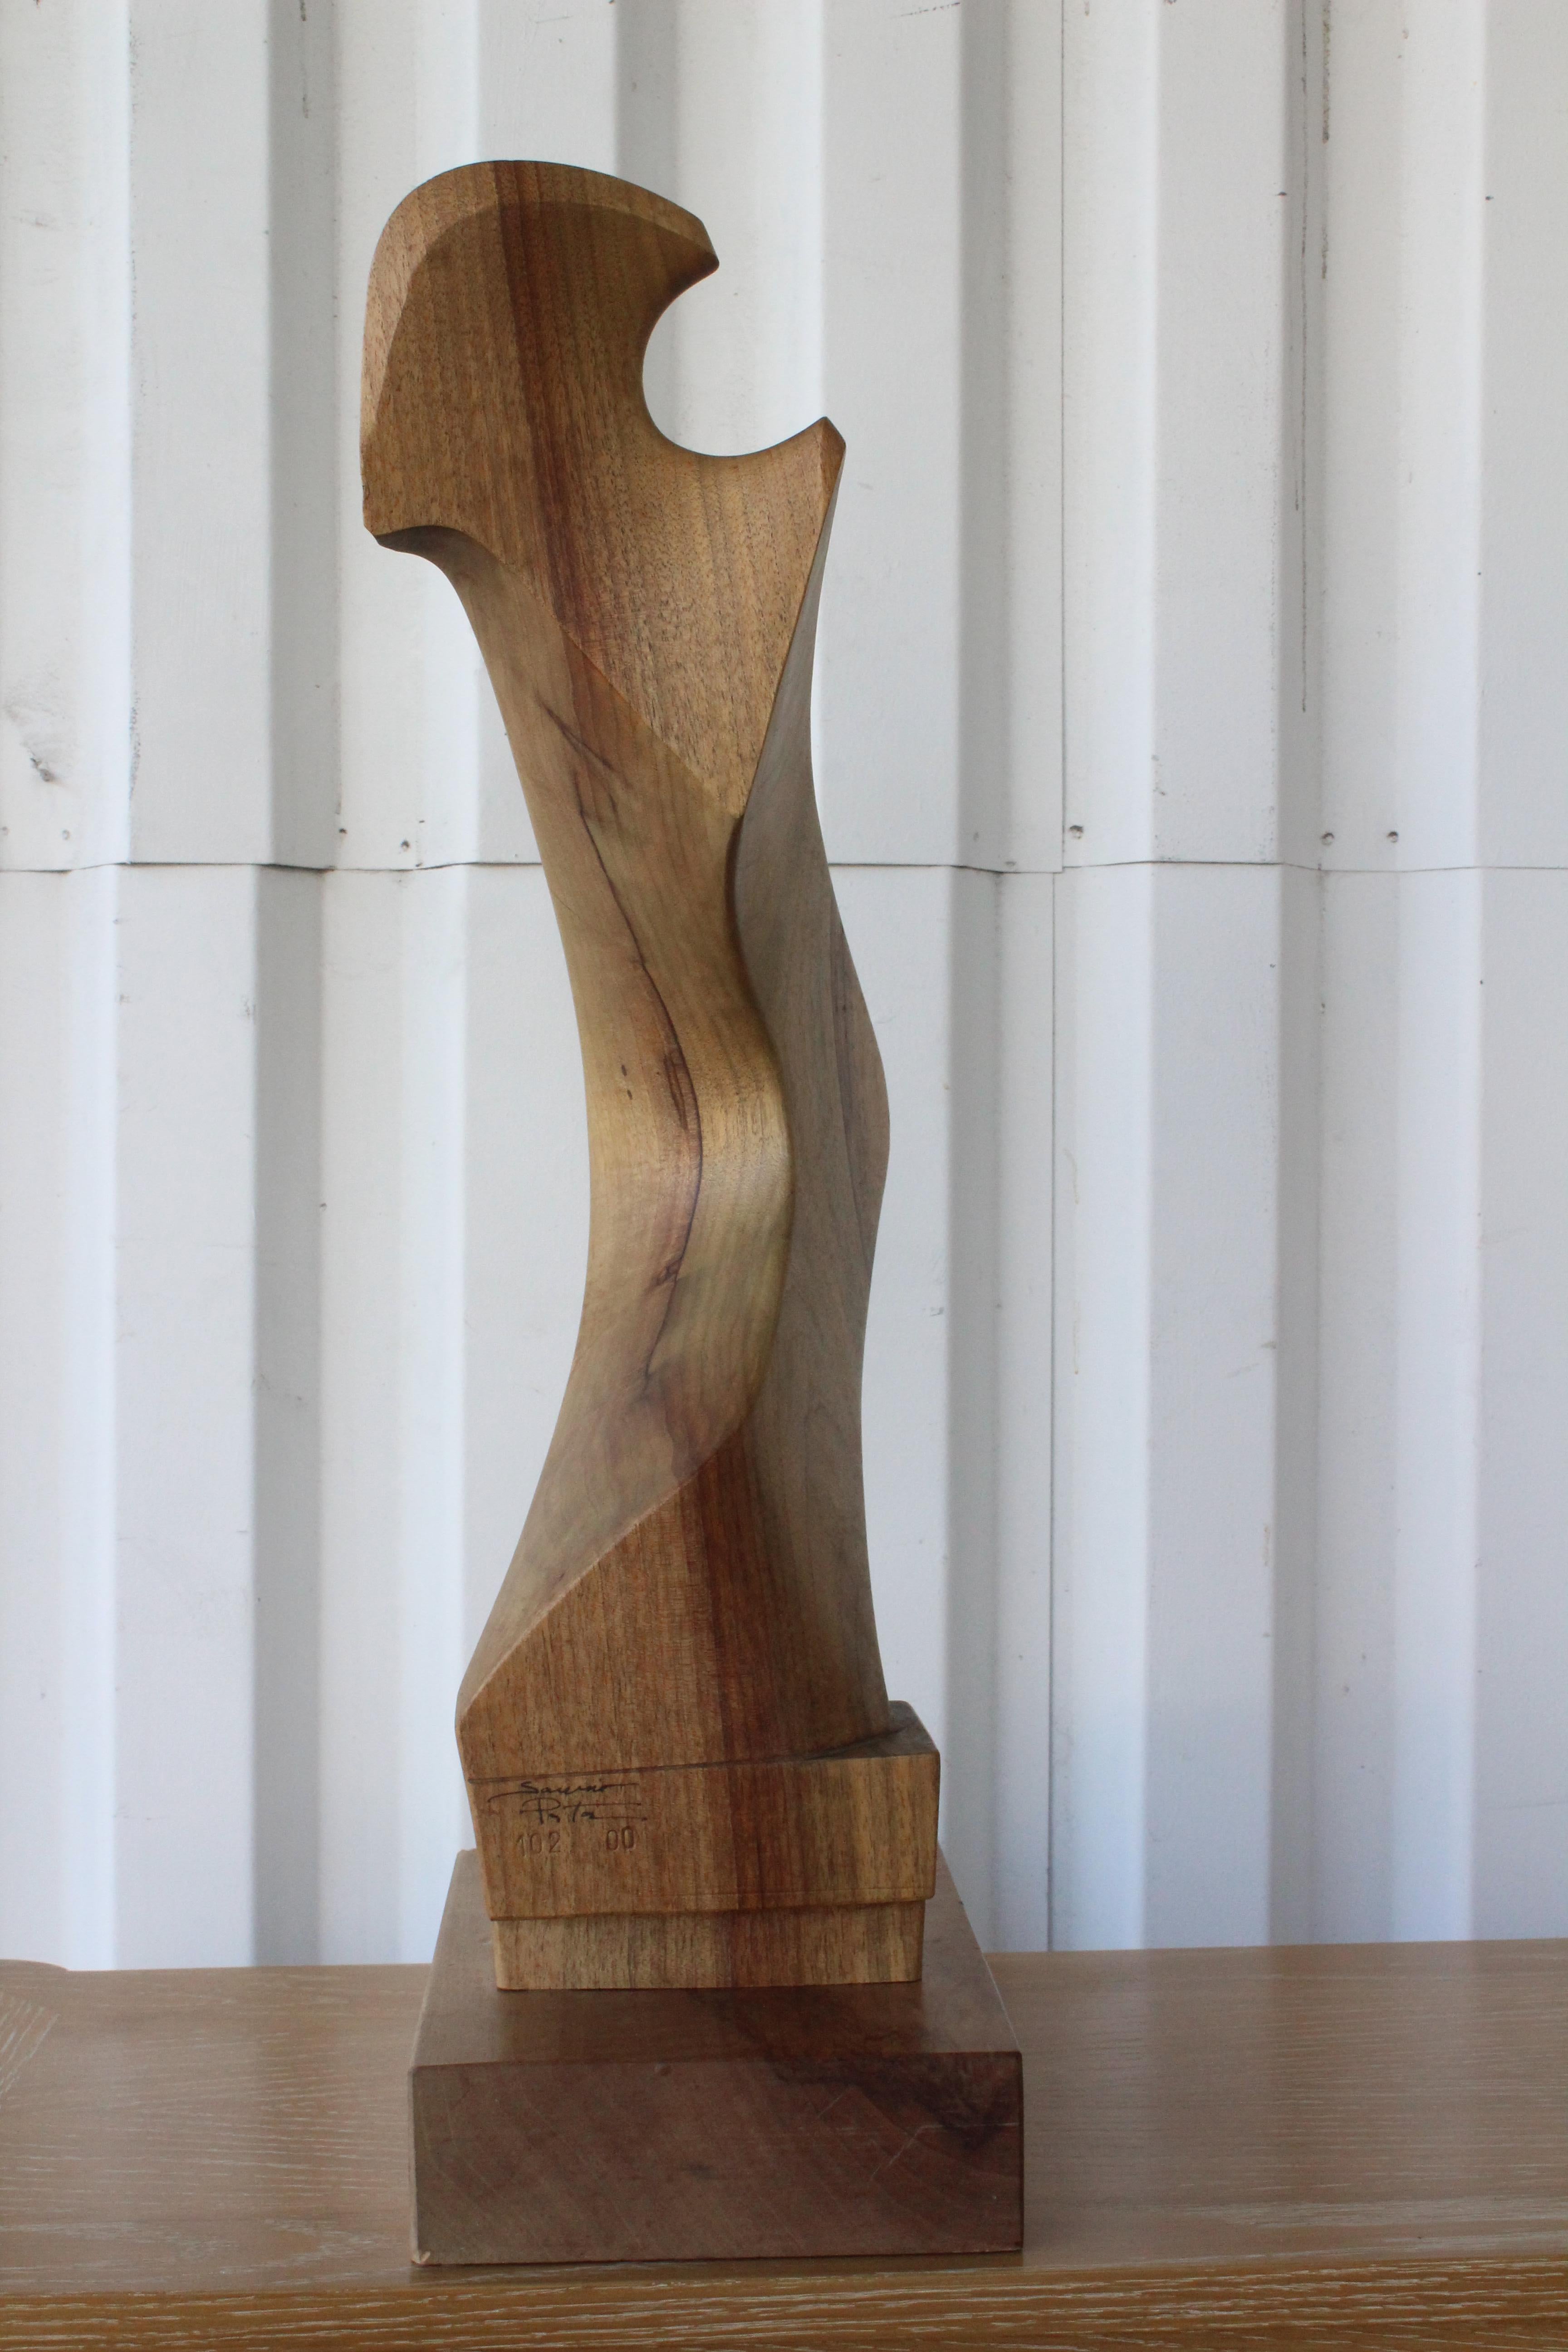 American Modern Wood Sculpture, Signed, 2000